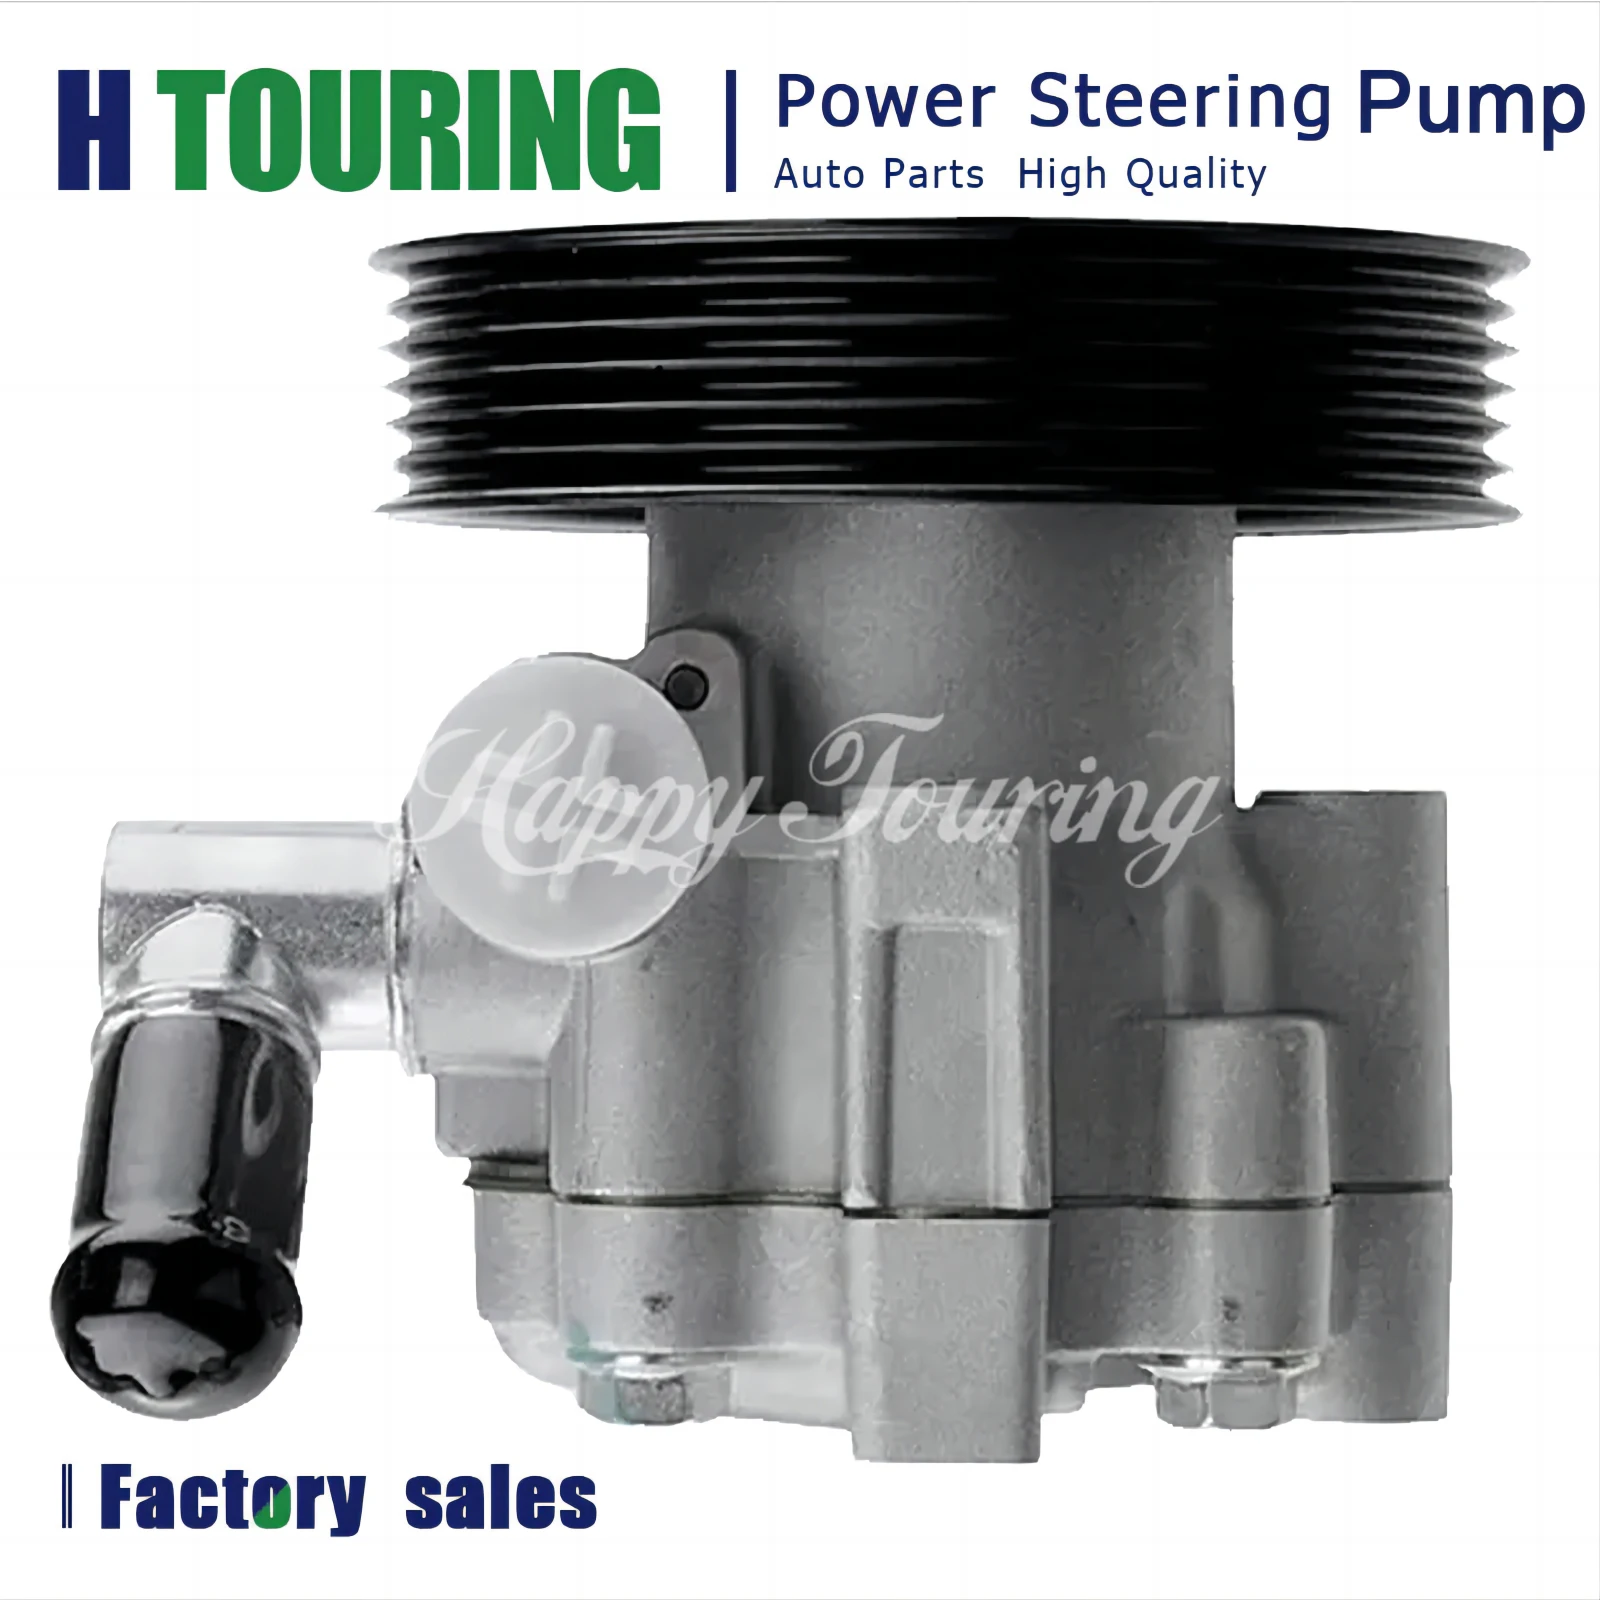 

Hydraulic Auto Power Steering Pump for Chevrolet Cruze 1.8L 2009 2010 2011 2012 Model OEM 96837812 96985600